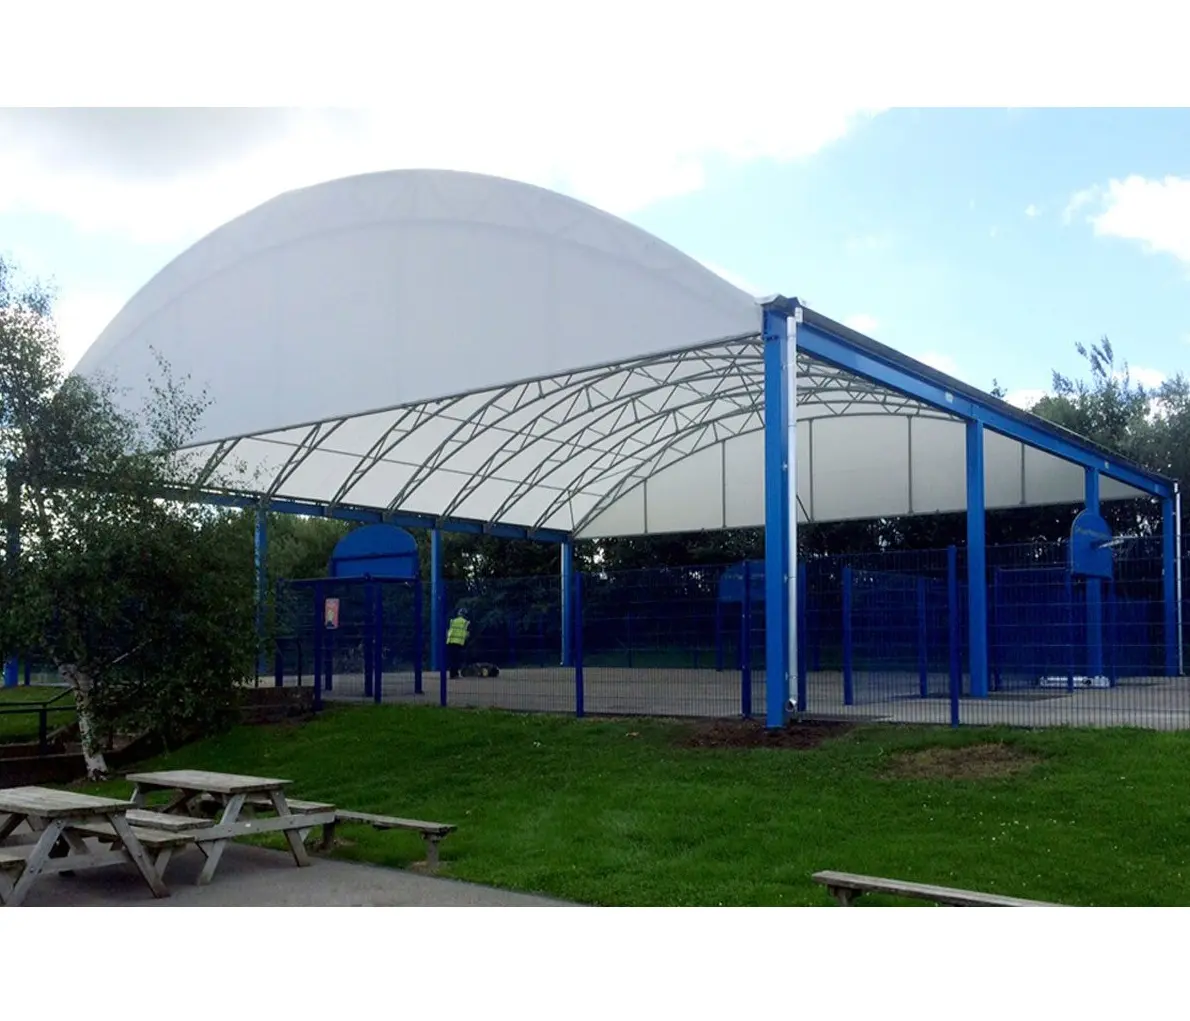 Kustom raket tenis lapangan struktur membran atap tenda raket tenis dengan atap